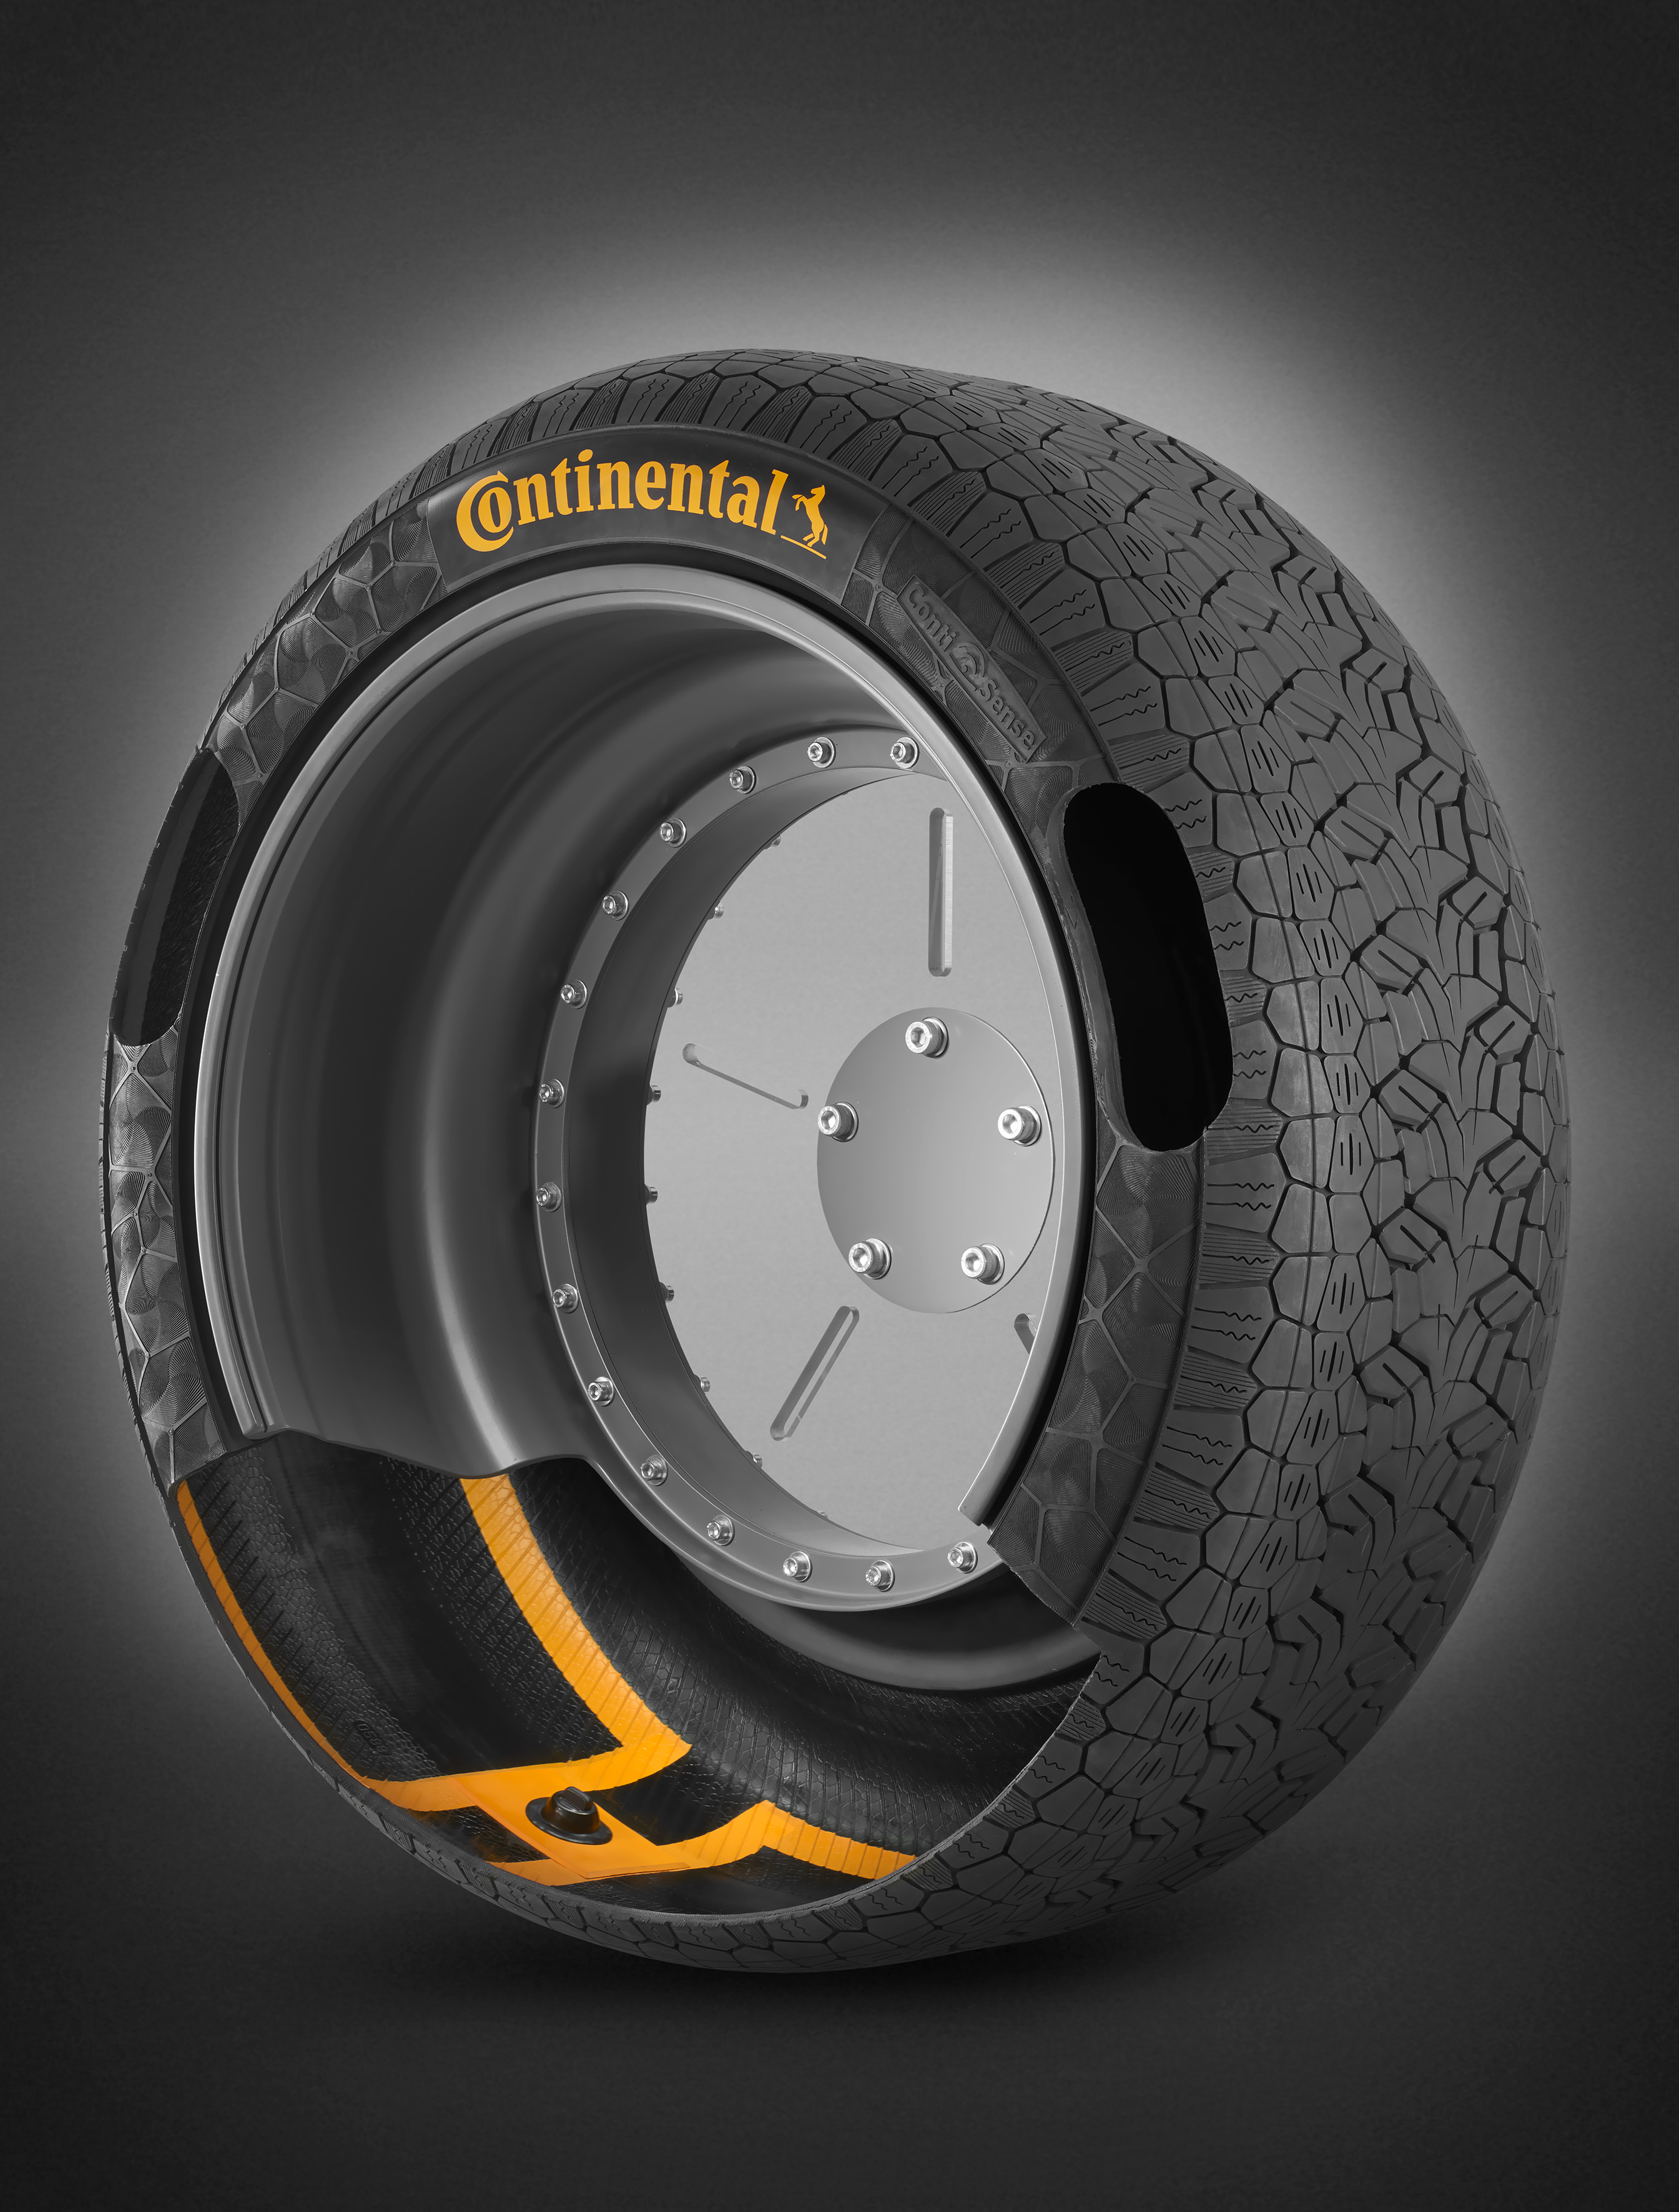 Continental ContiSense smart tires